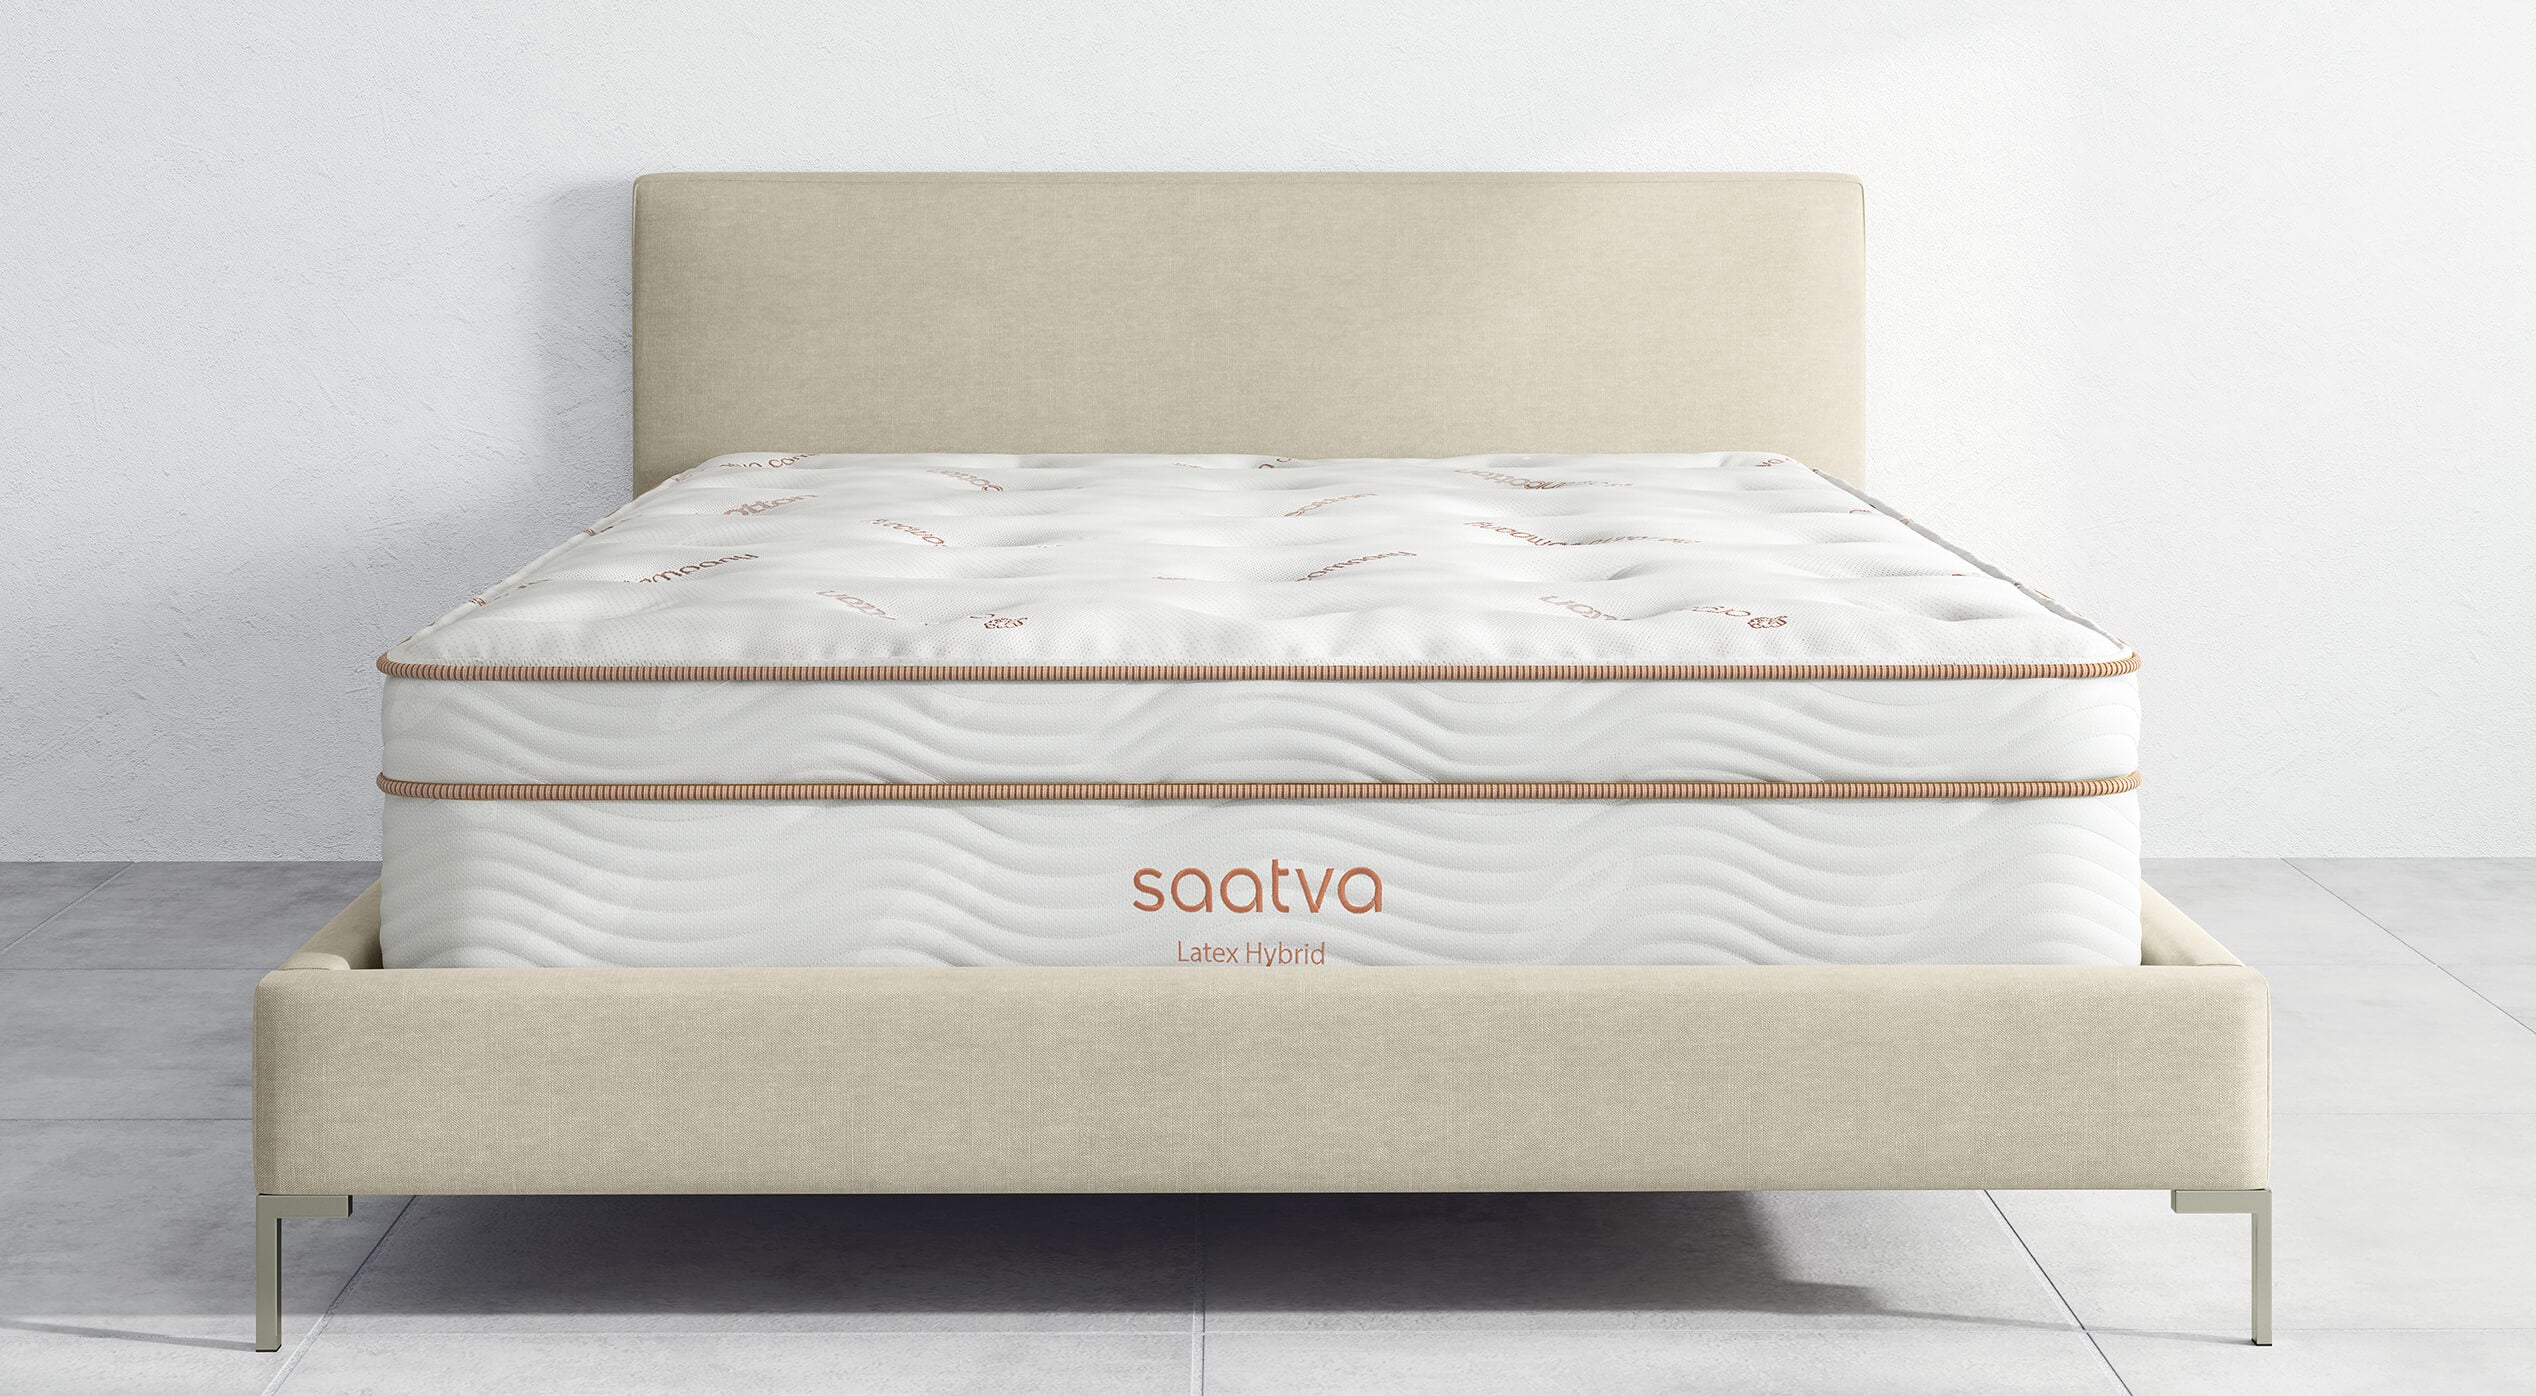 is saatva a hybrid mattress